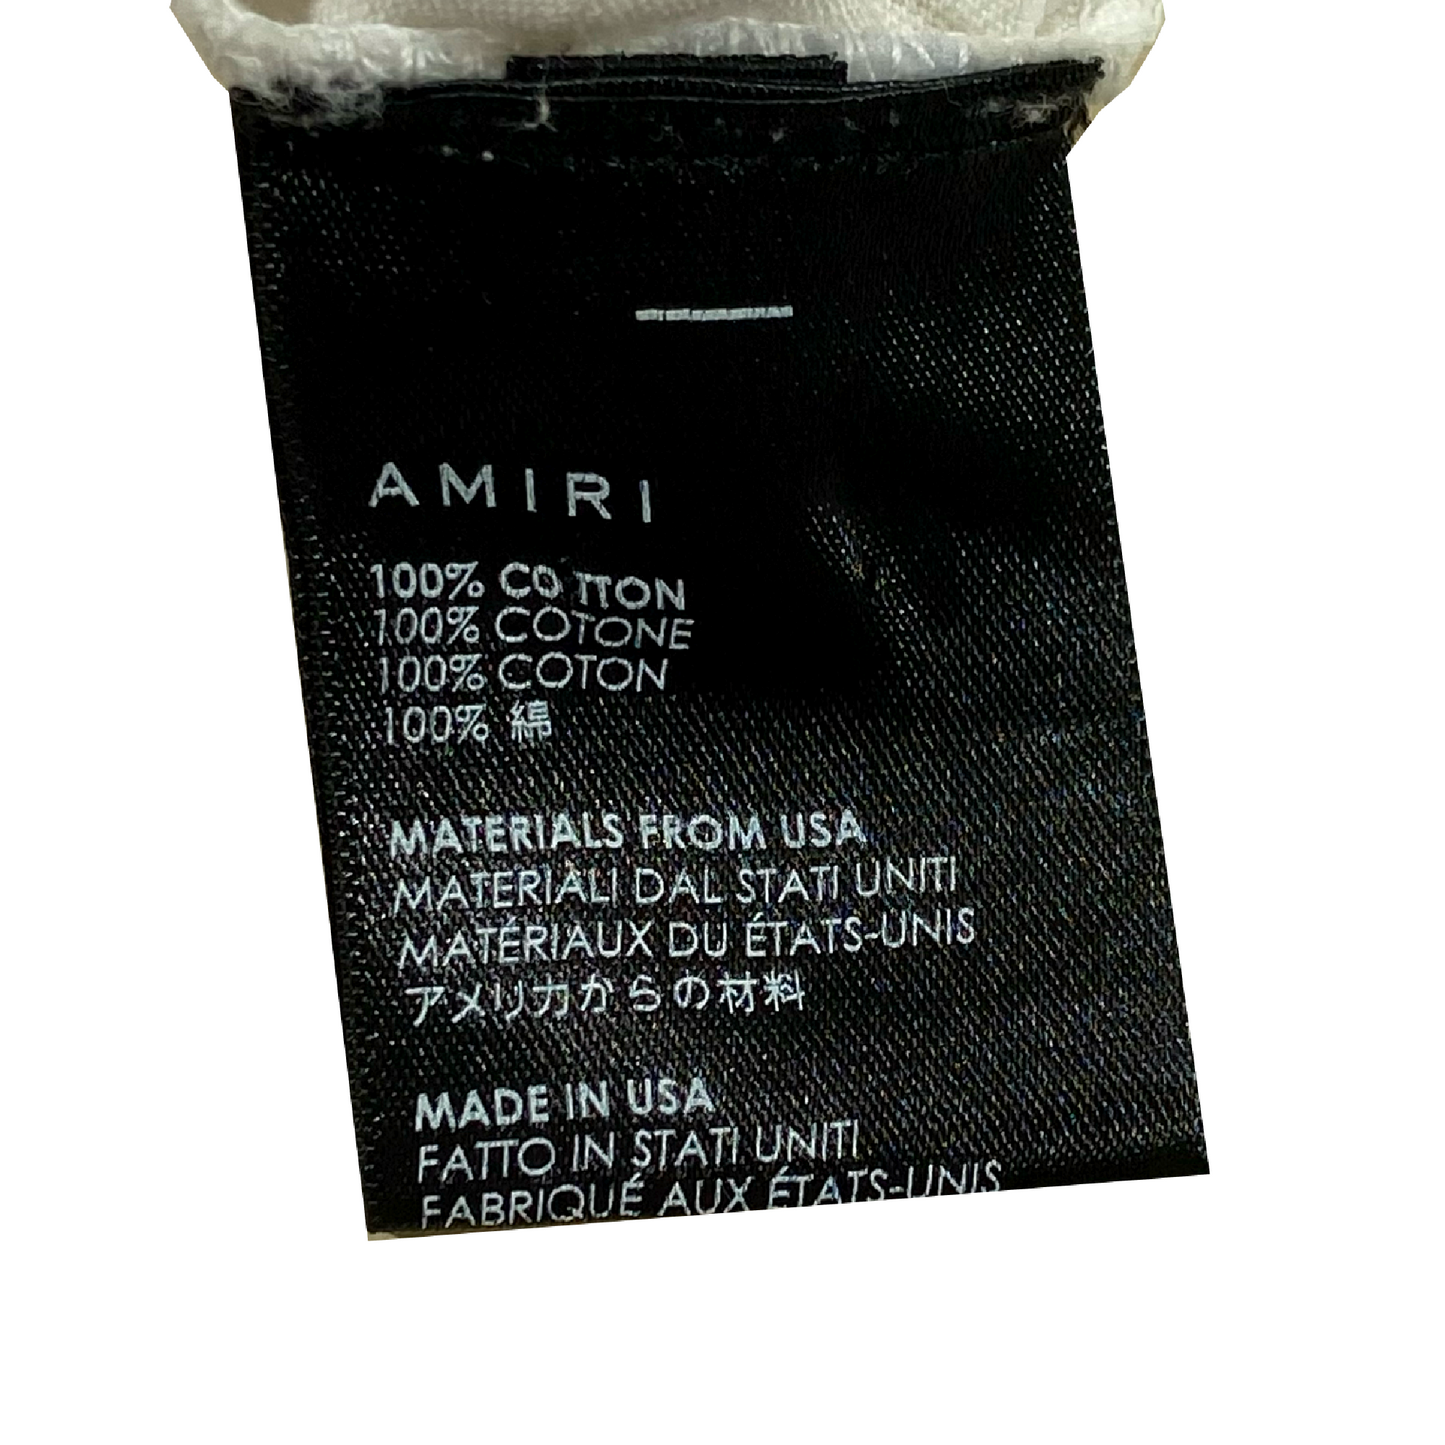 AMIRI BONE T-SHIRT WHITE XL